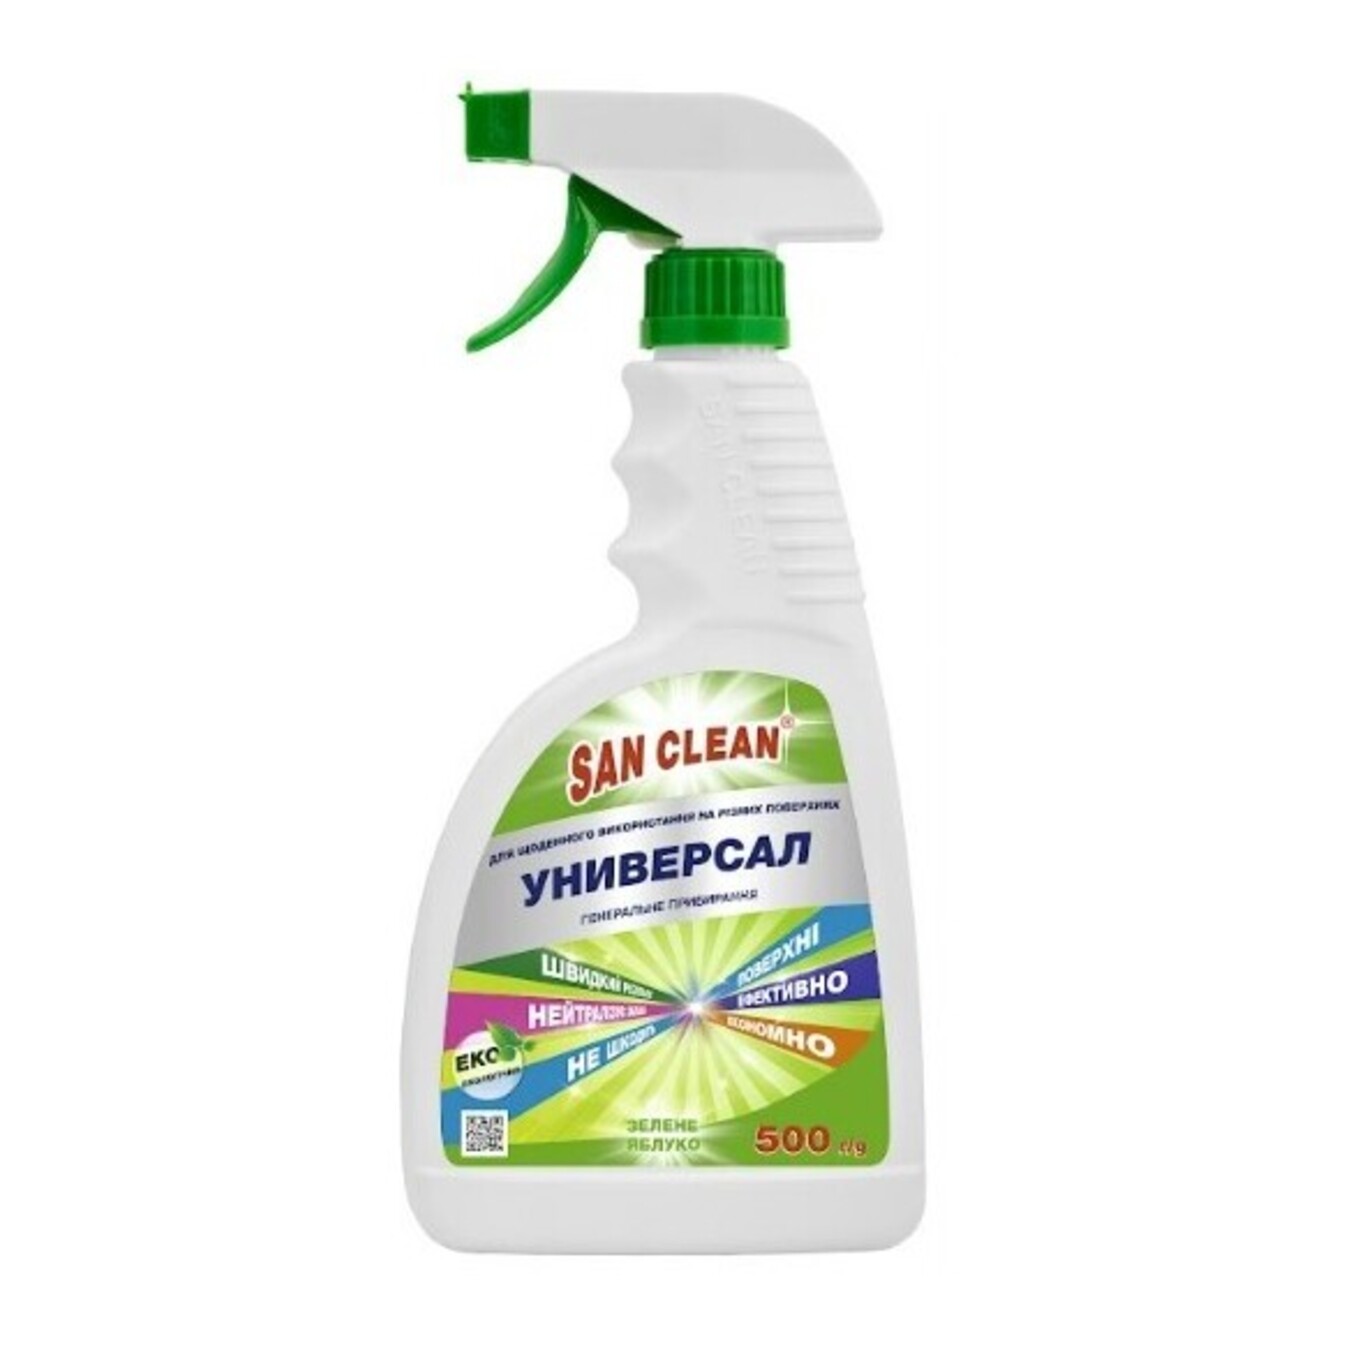 Detergent San Clean Universal-2000 general cleaning lemon with sprayer 500g